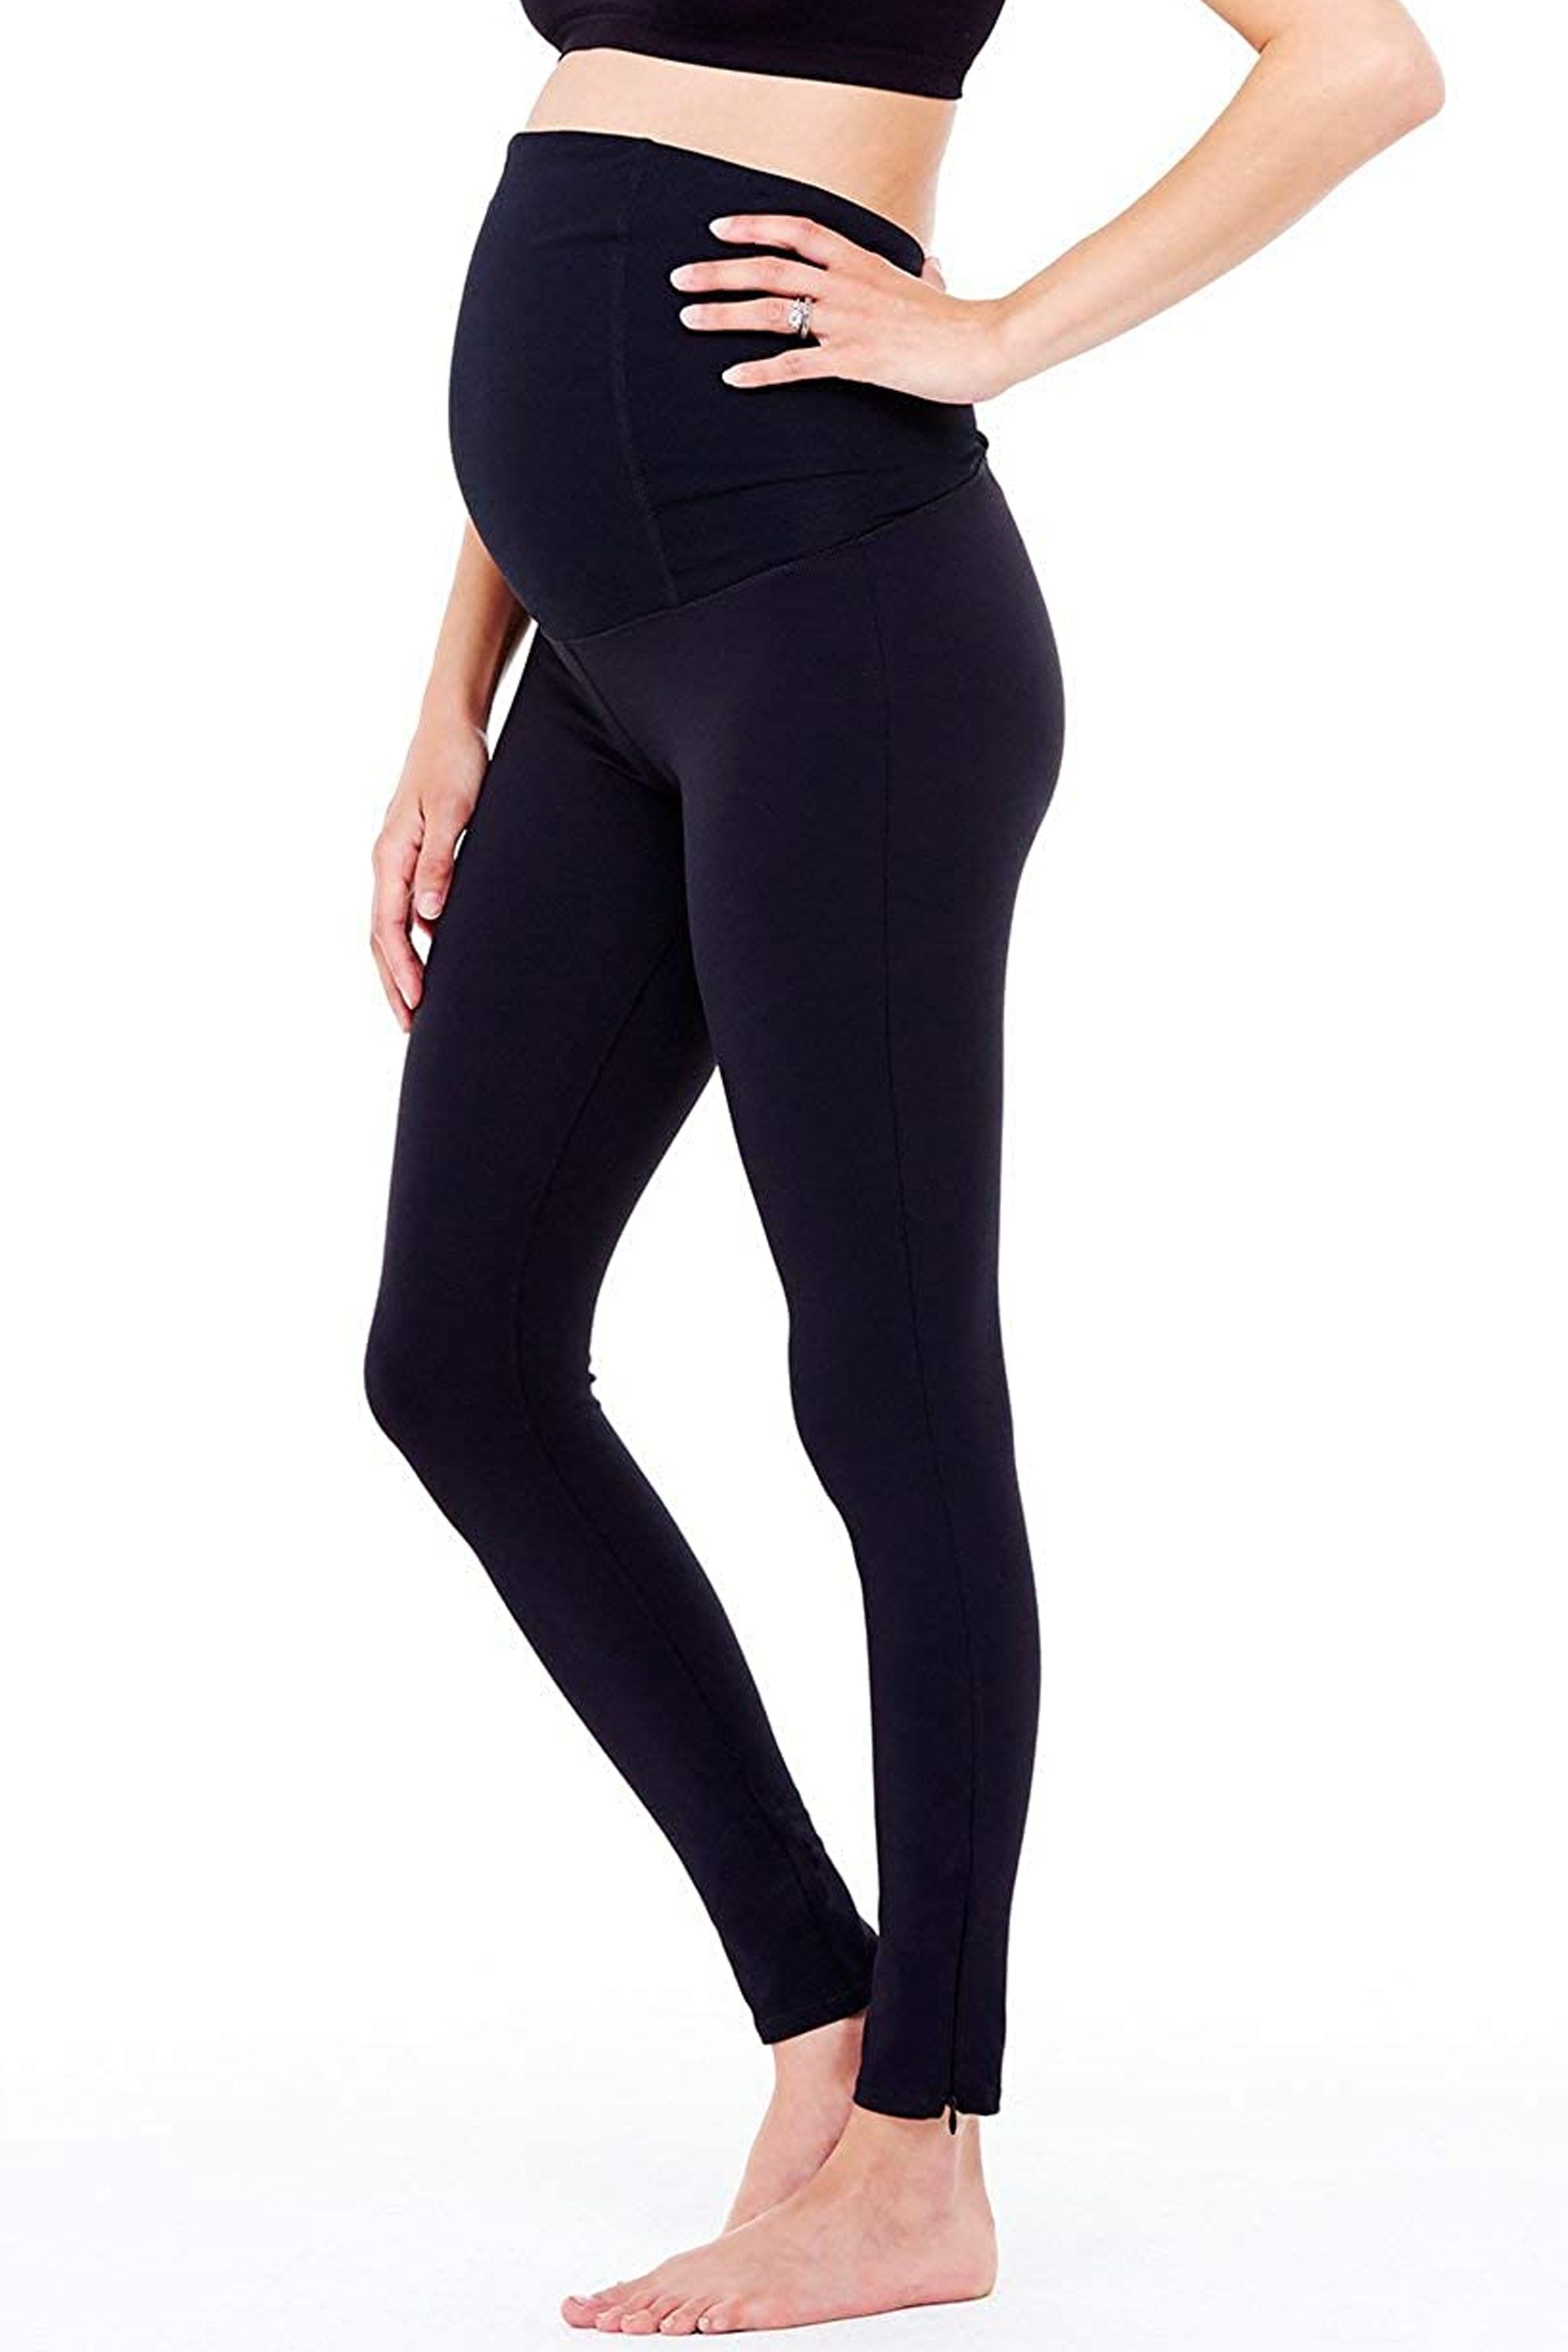 Kiabi Leggings WOMEN FASHION Trousers Leggings Maternity discount 58% Black XL 